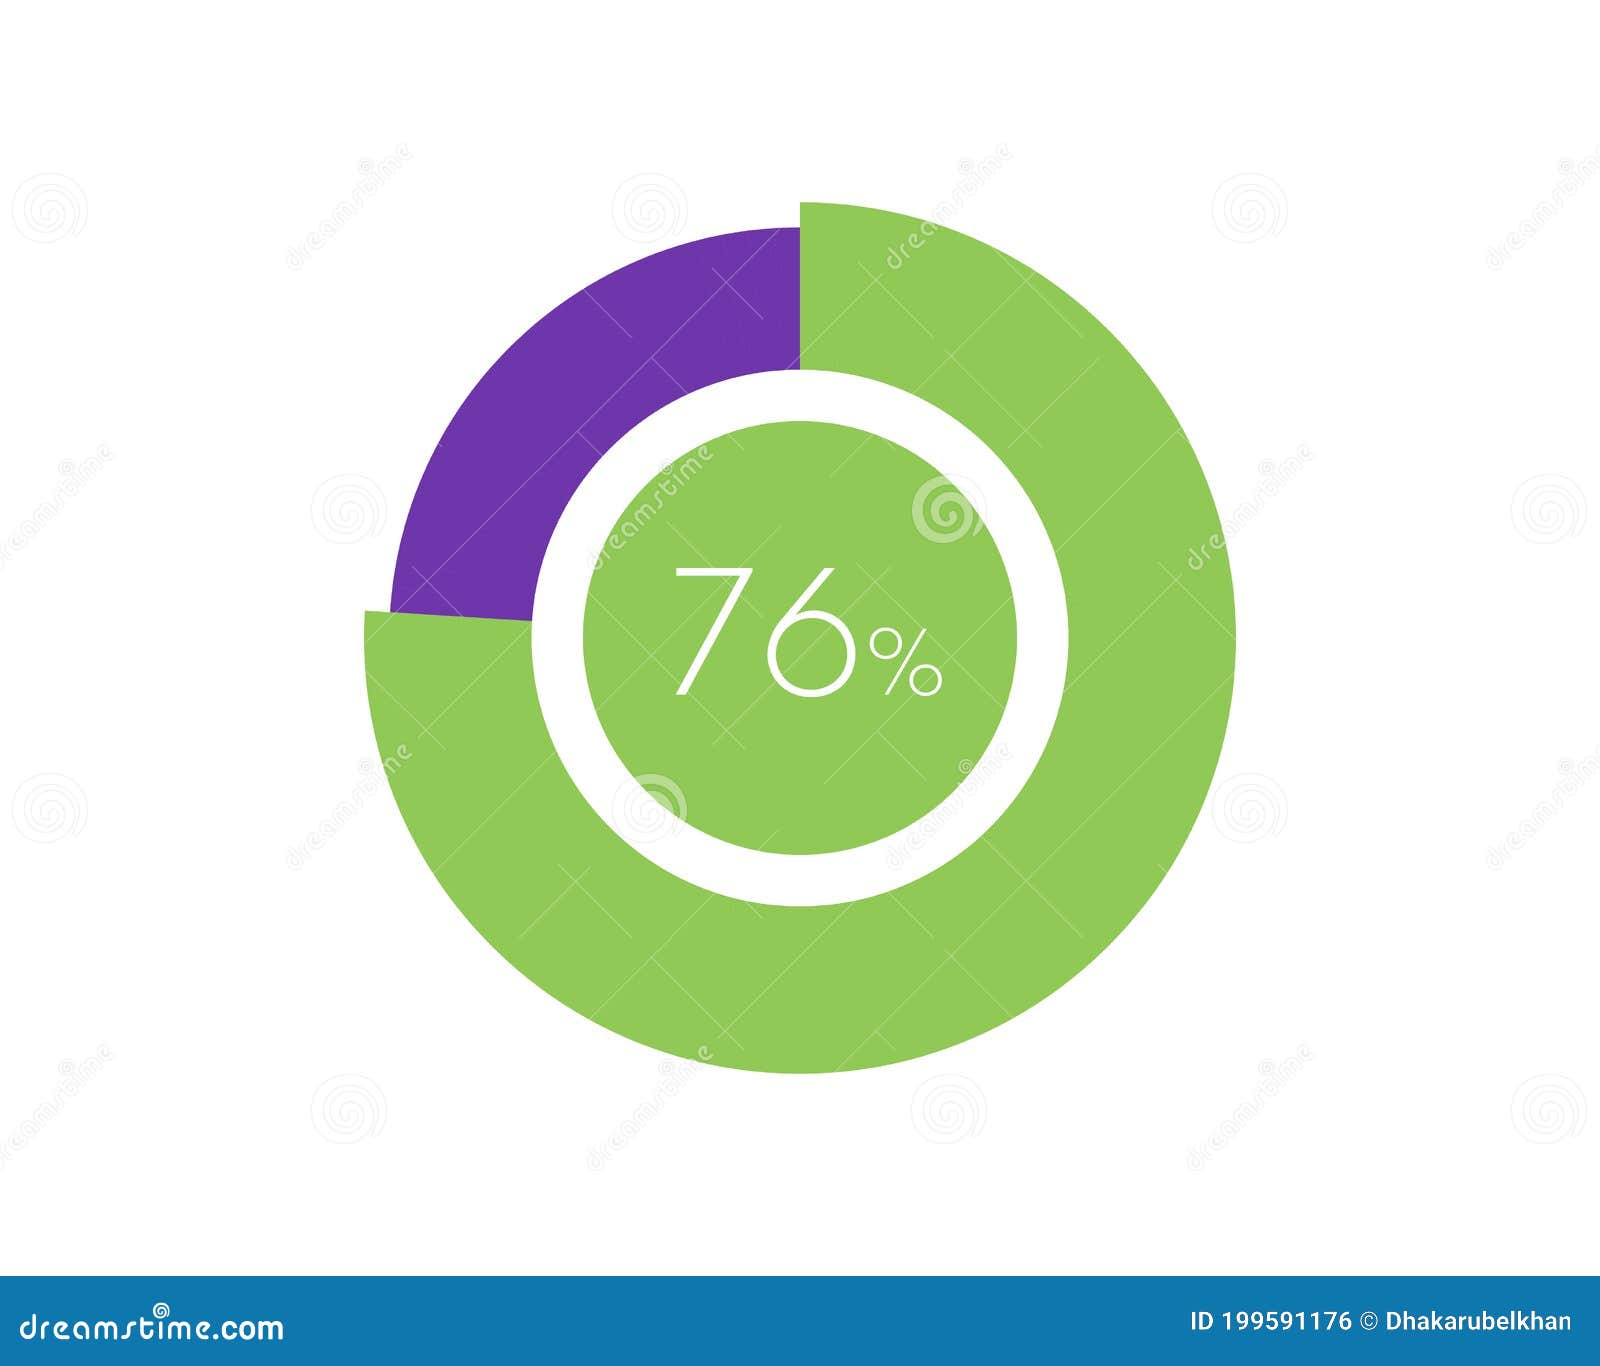 76 Percentage, 76 Percentage Circle Diagram Infographic Stock Vector